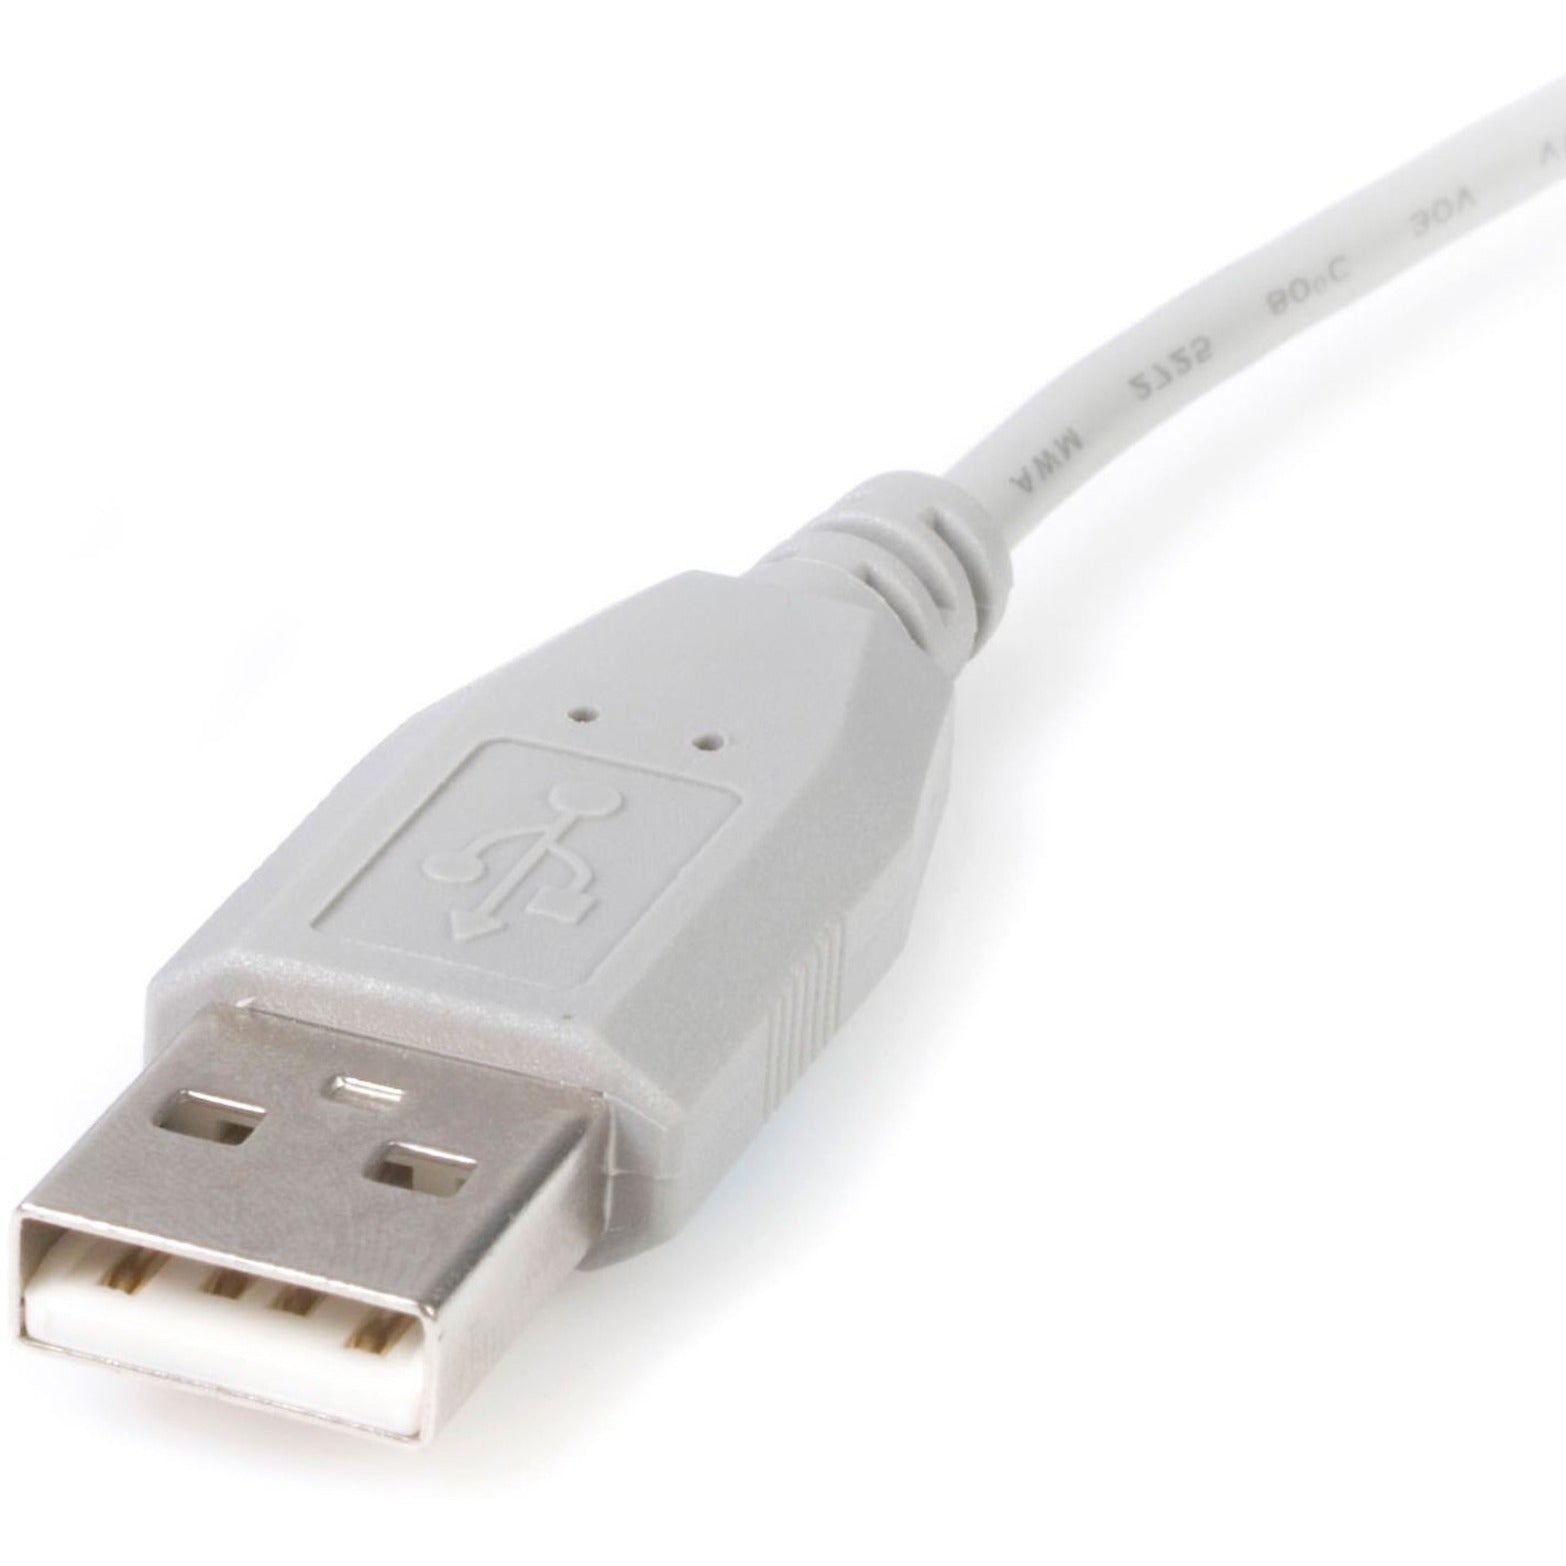 StarTech.com USB2HABM3 3 ft Mini USB 2.0 Cable - A to Mini B, Data Transfer Cable for Digital Camera, PC, Smartphone, GPS, Hard Drive